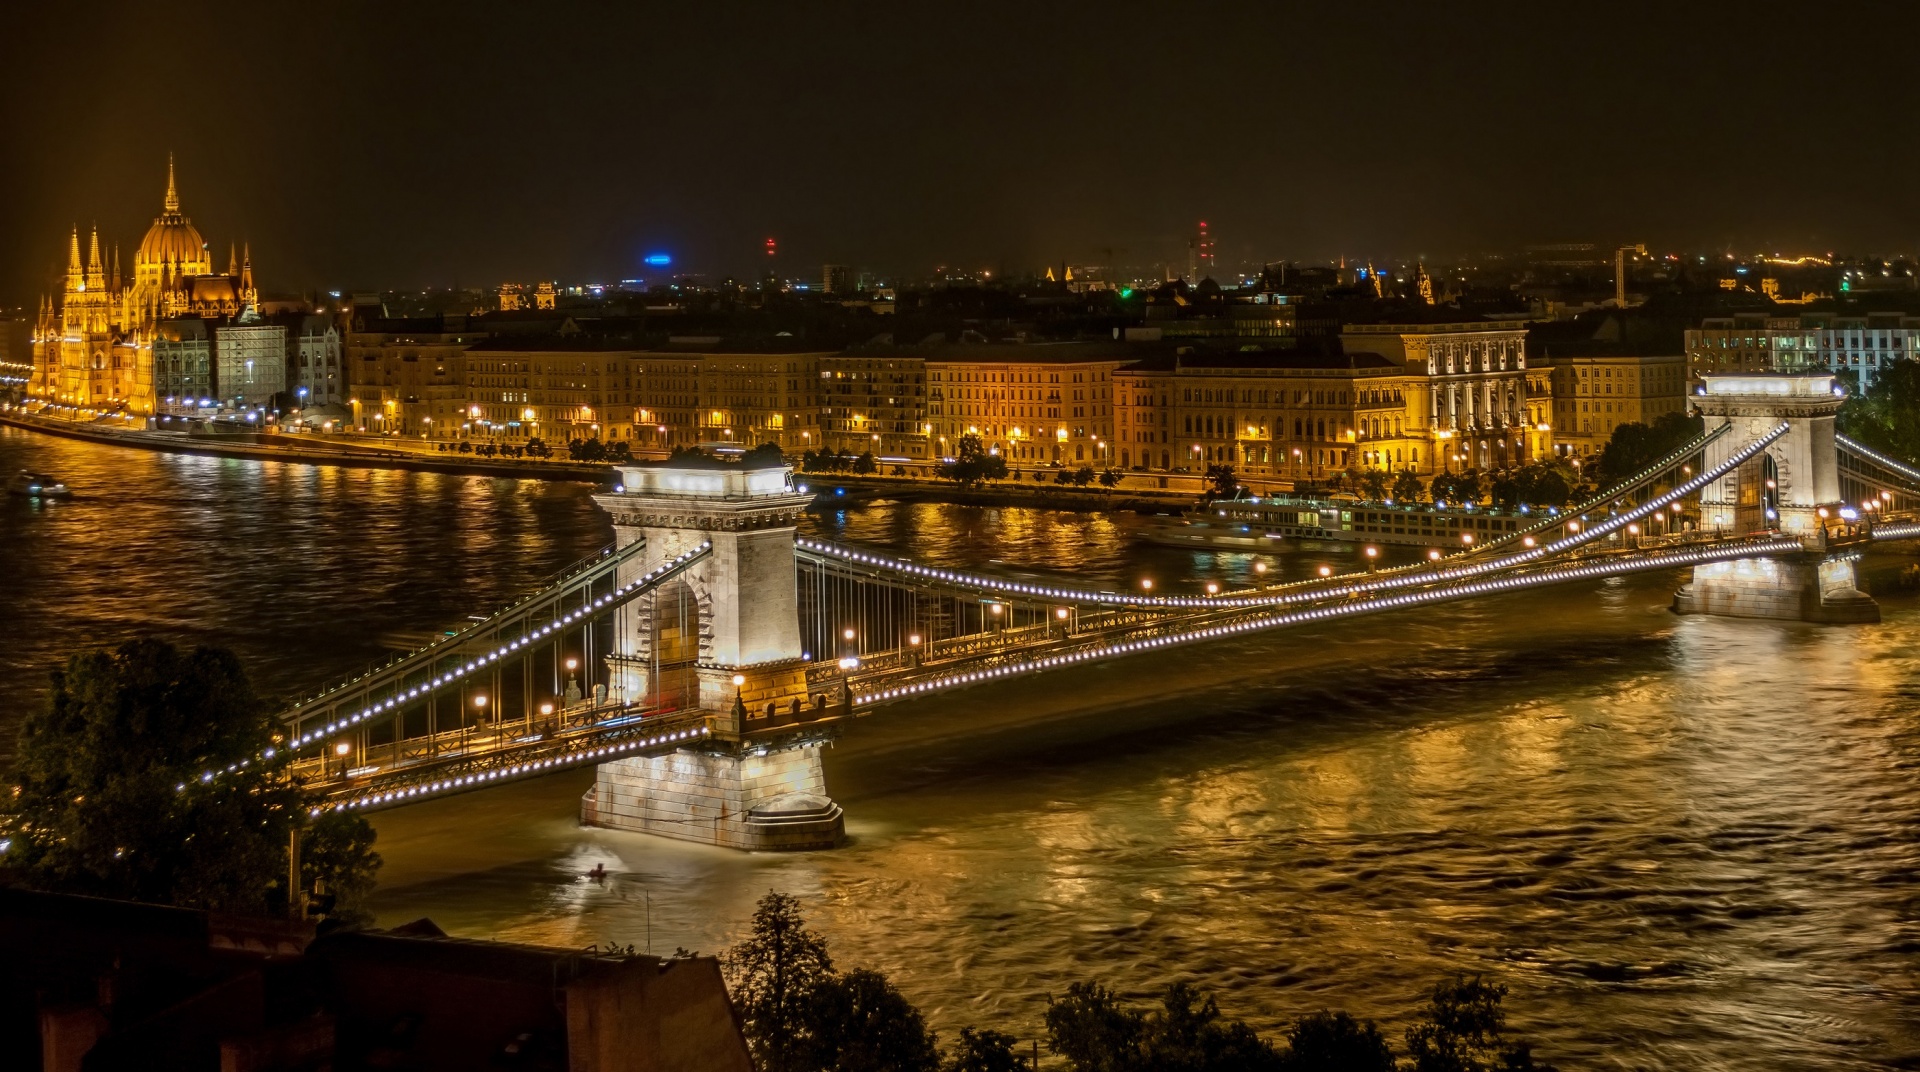 Széchenyi Chain Bridge At Night